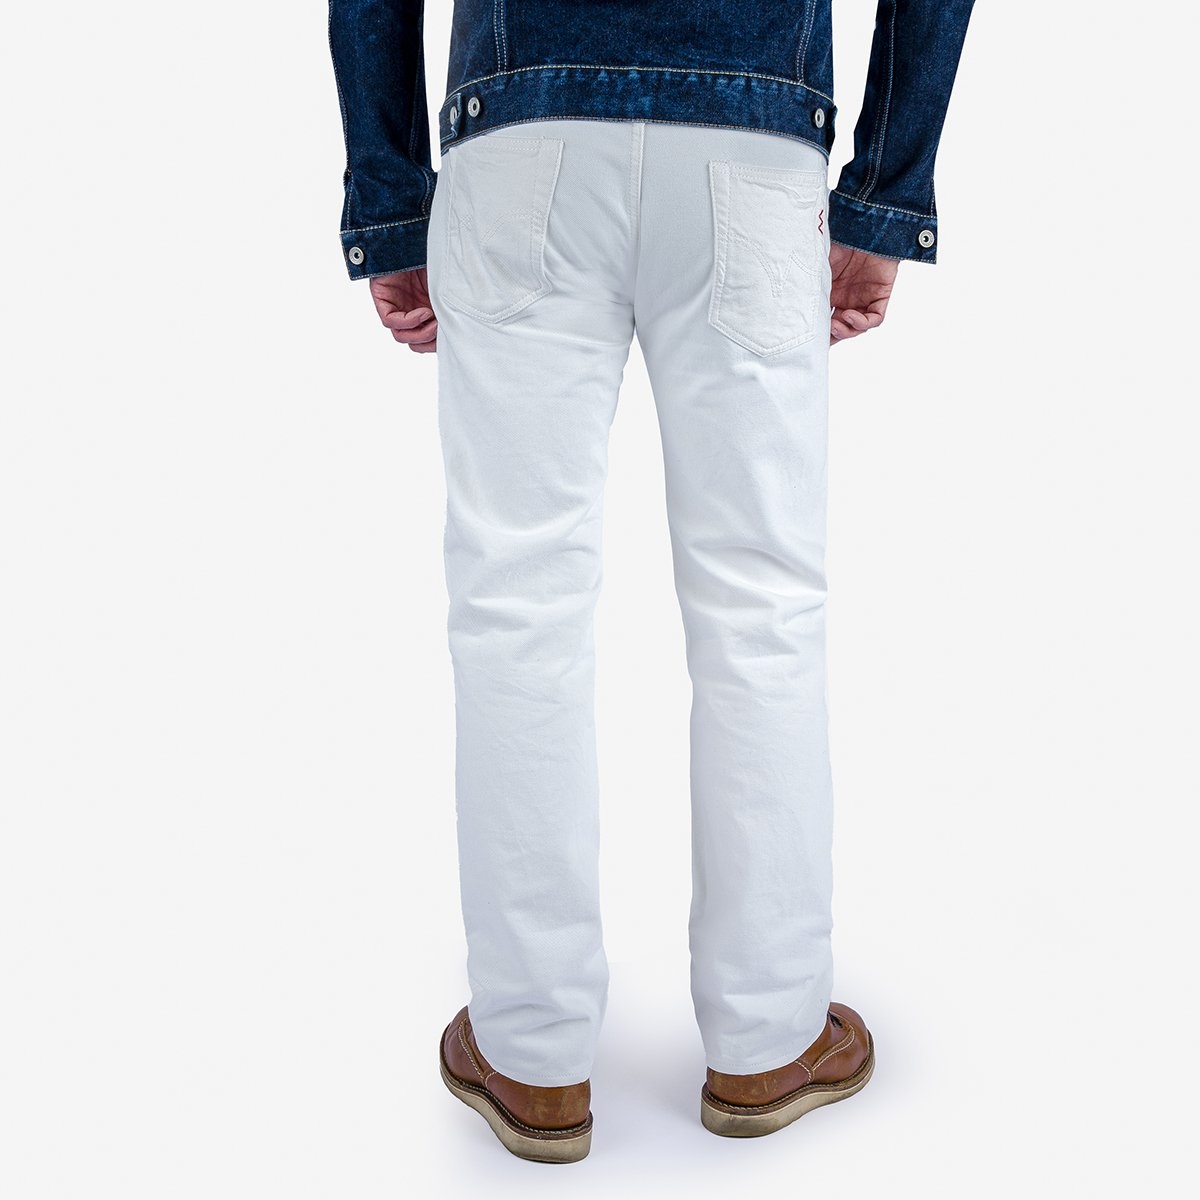 IH-666-WT 13.5oz Denim Slim Straight Cut Jeans - White - 3